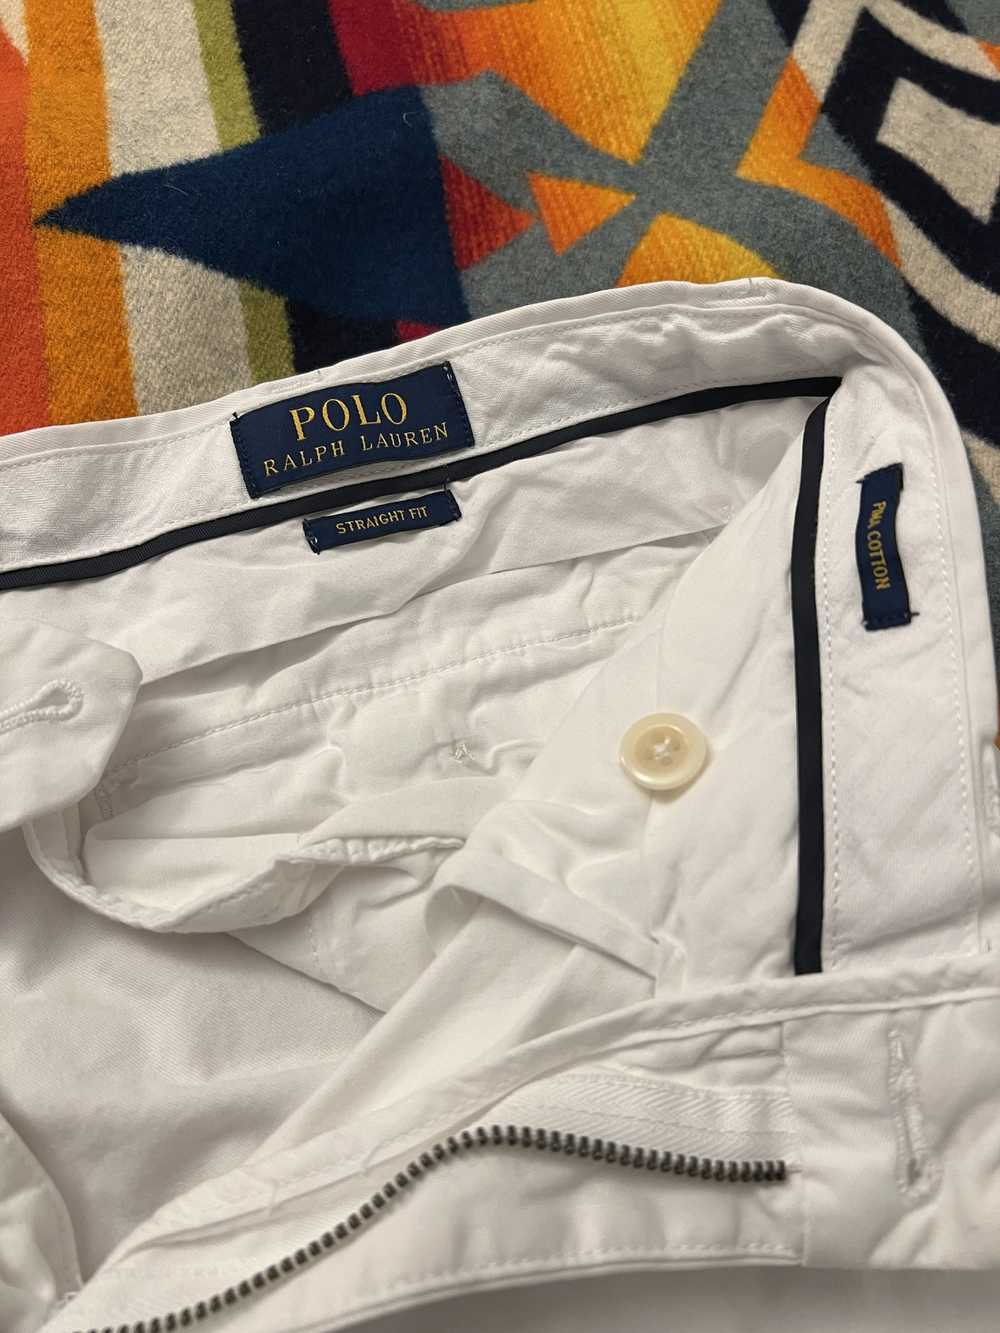 Polo Ralph Lauren Polo White Cotton Shorts - image 3